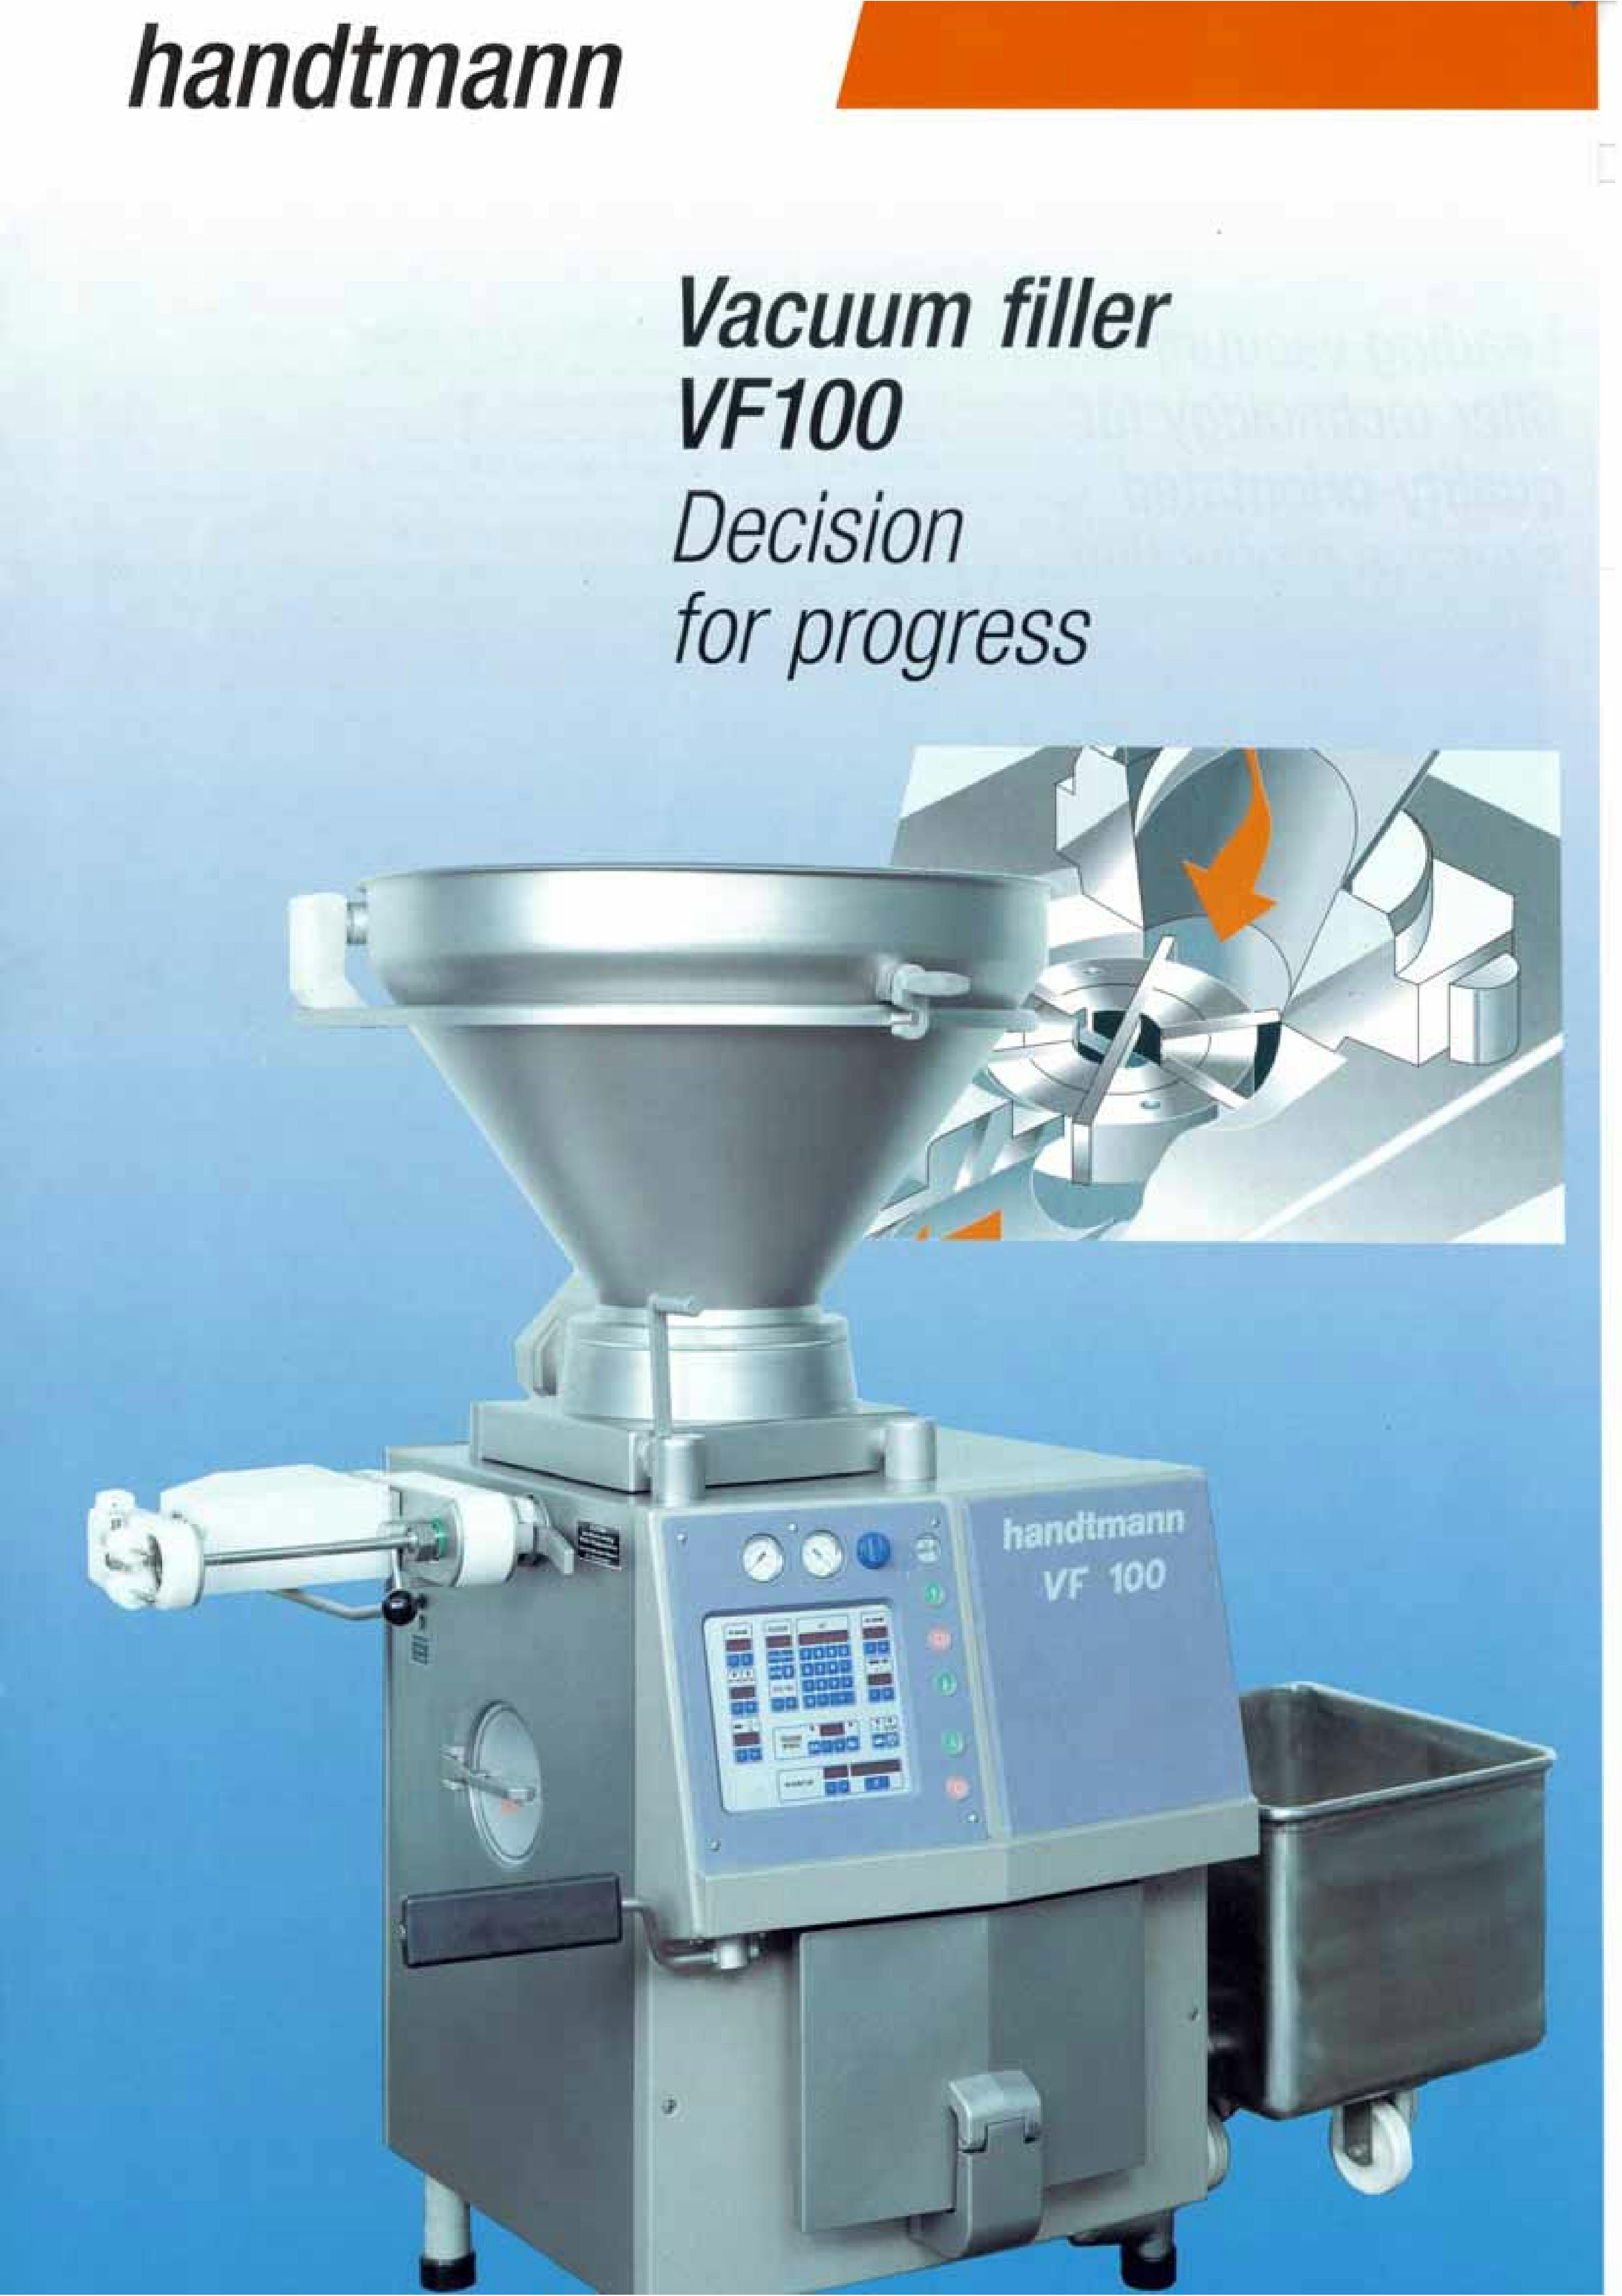 Handtmann VF100 vacuum filler - Enchedor de pistão - image 8